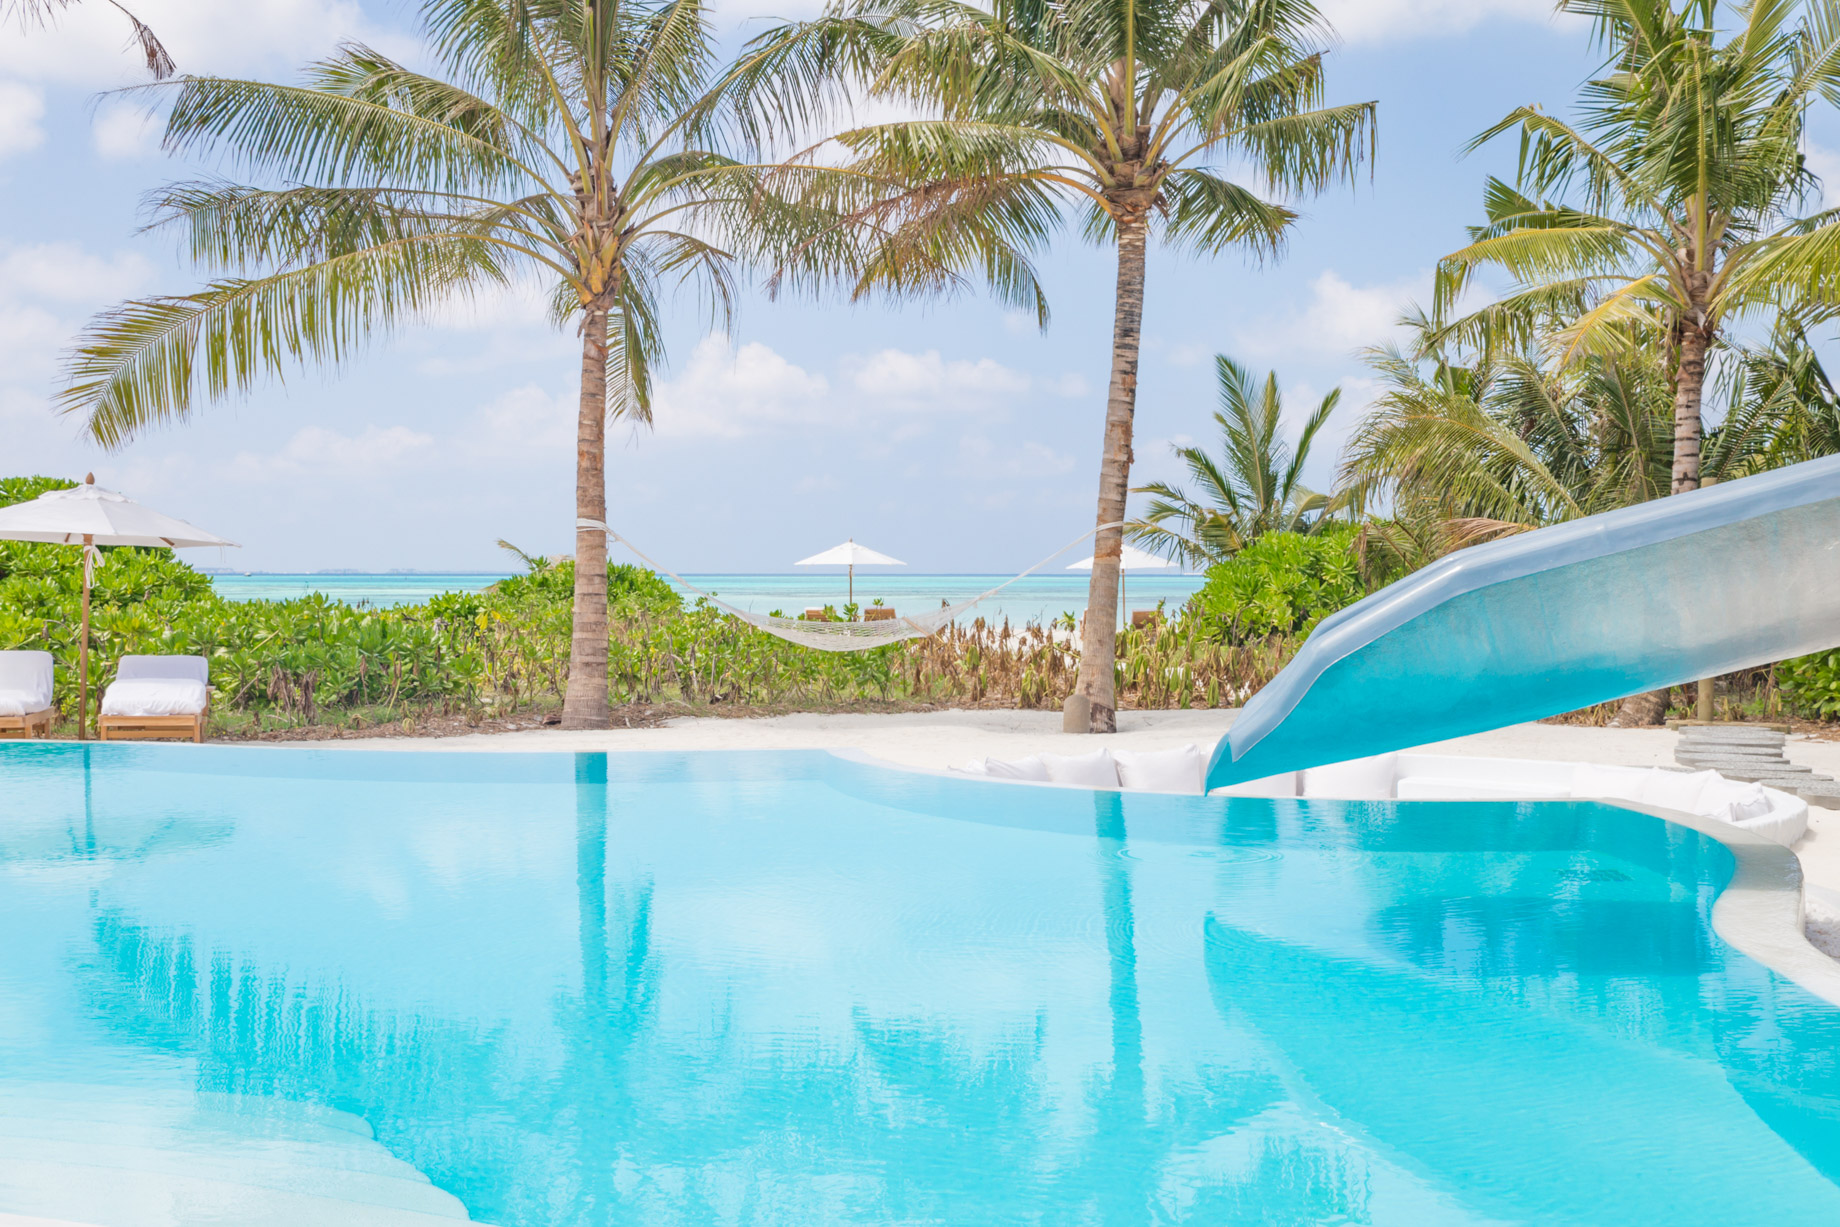 Soneva Jani Resort - Noonu Atoll, Medhufaru, Maldives - 3 Bedroom Island Reserve Villa Beachfront Pool Water Slide